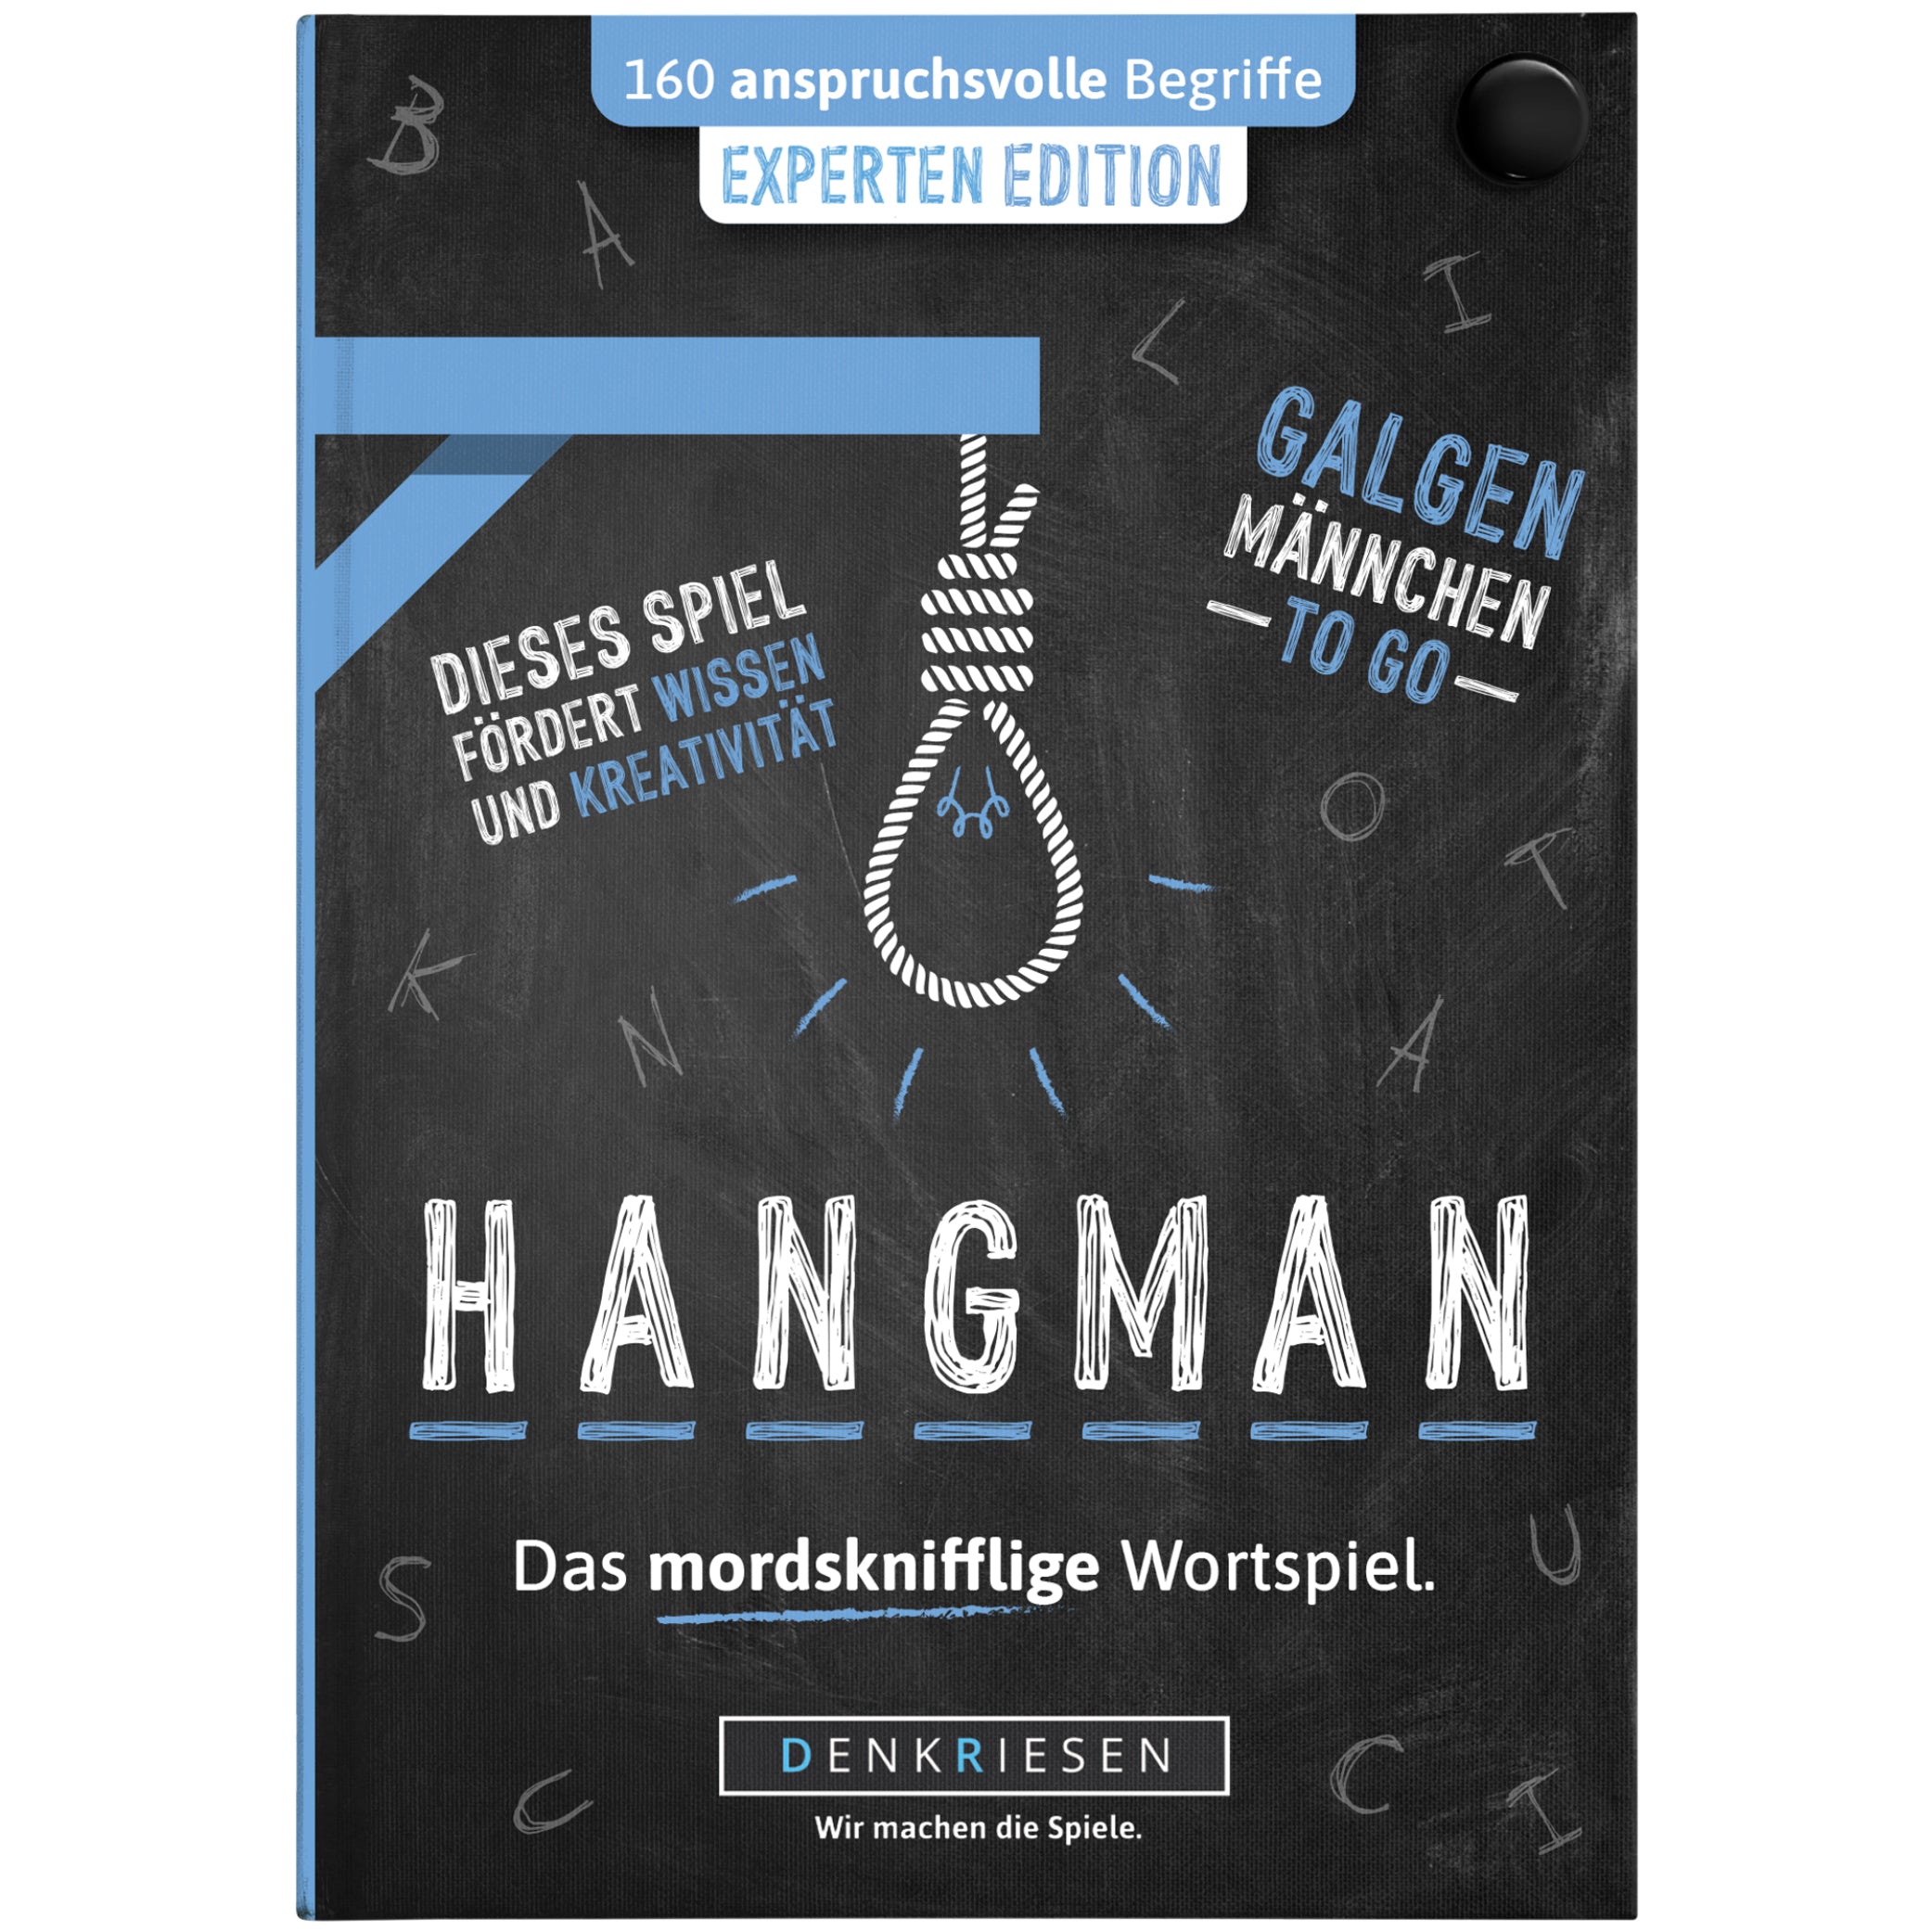 HANGMAN® | Experten Edition – "Das mordsknifflige Wortspiel."